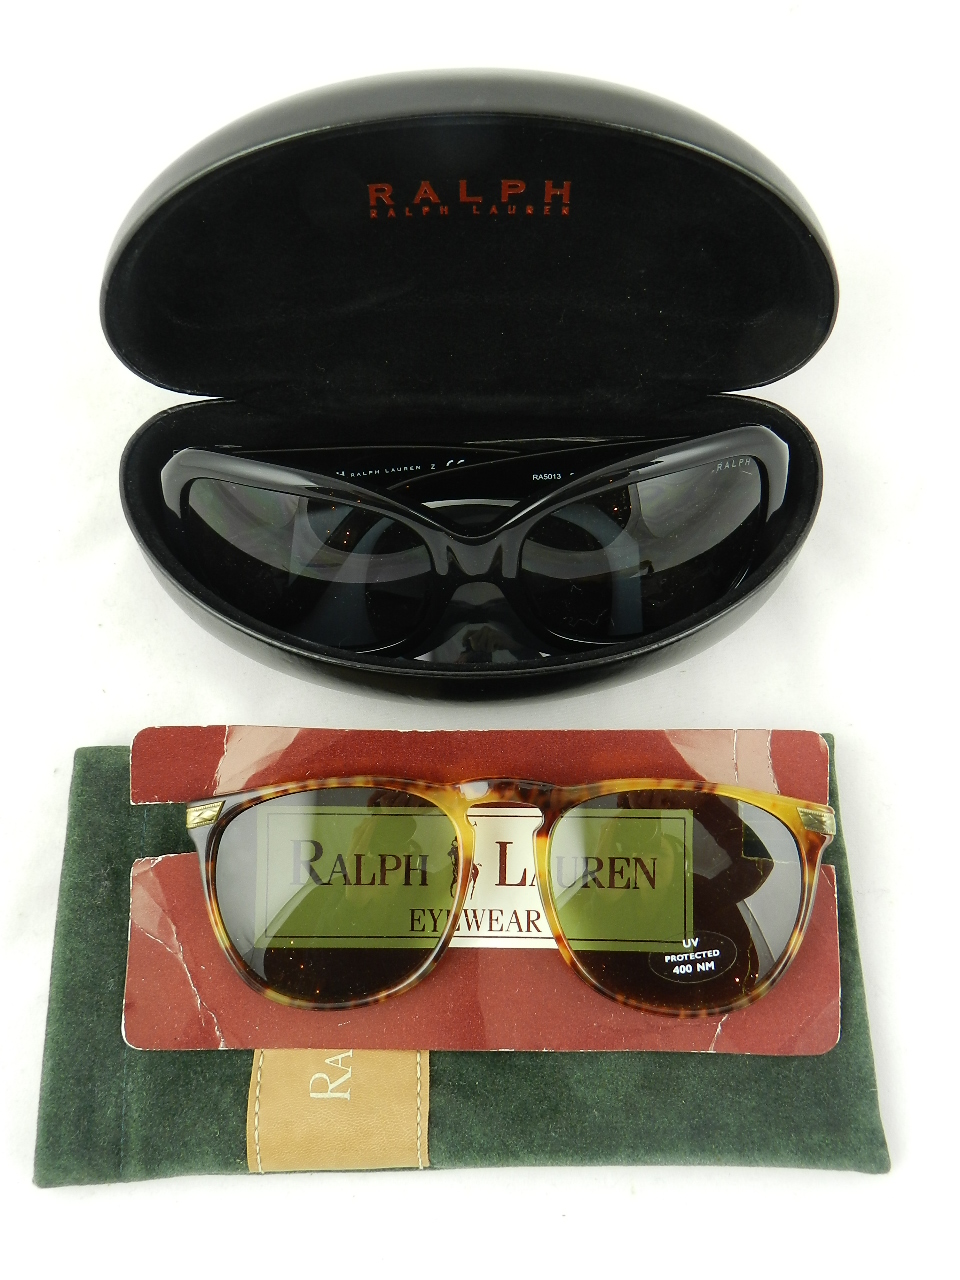 Two pairs of Ralph Lauren sun glasses.